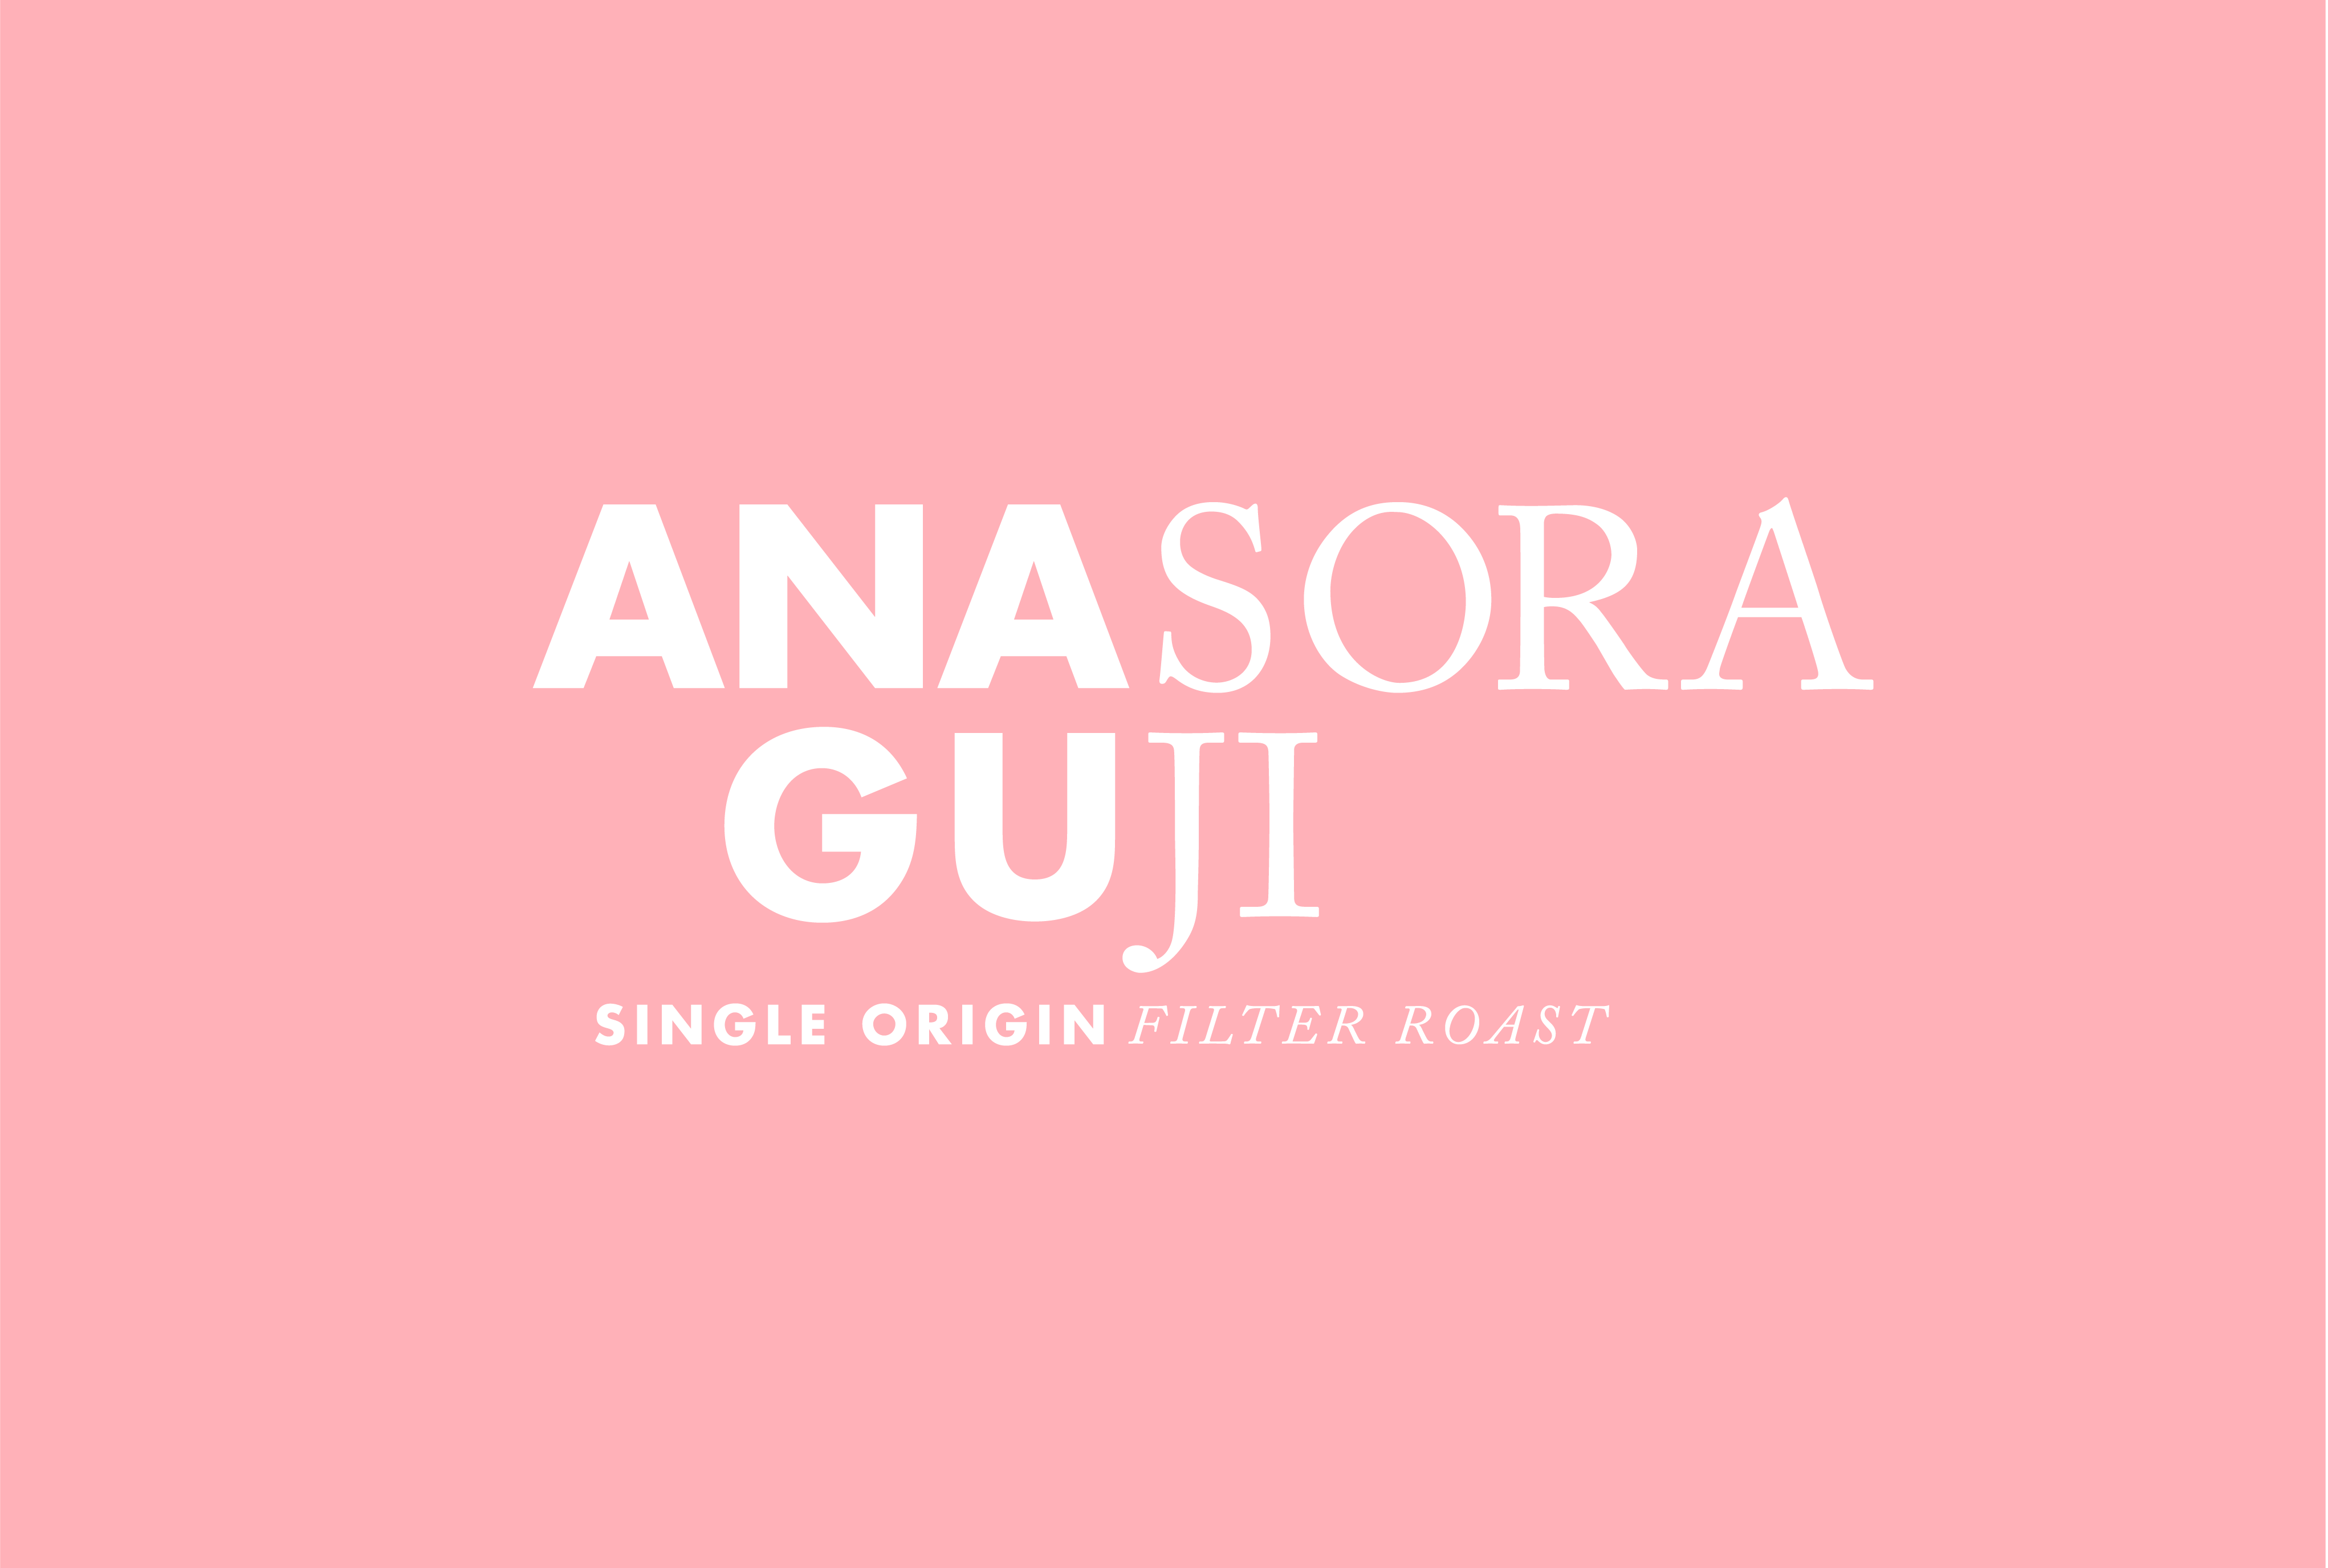 Anasora Guji, single origin coffee beans, filter roast